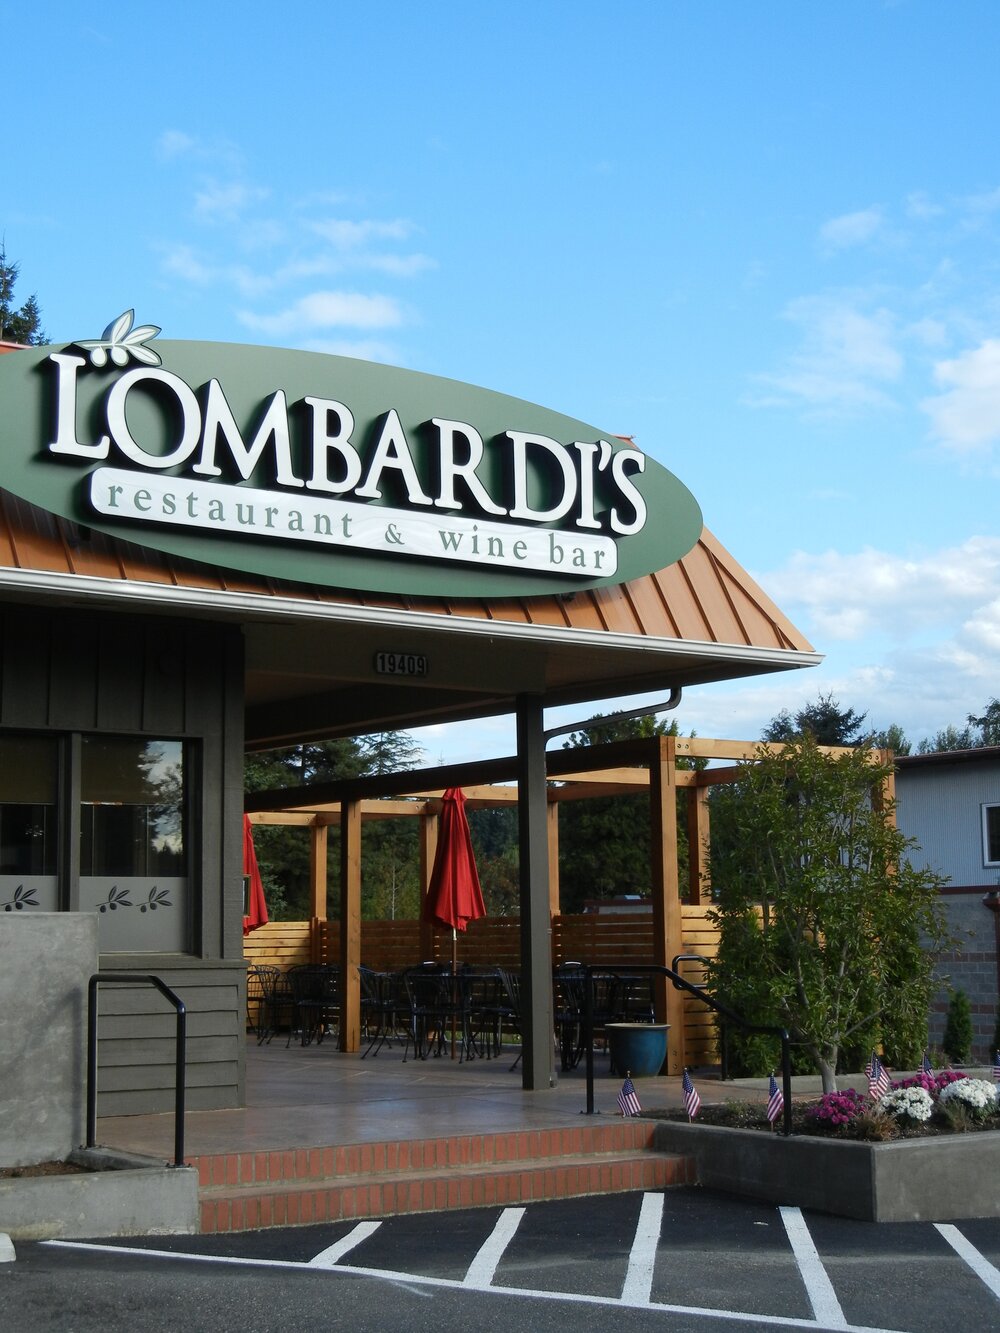 Lombardi's